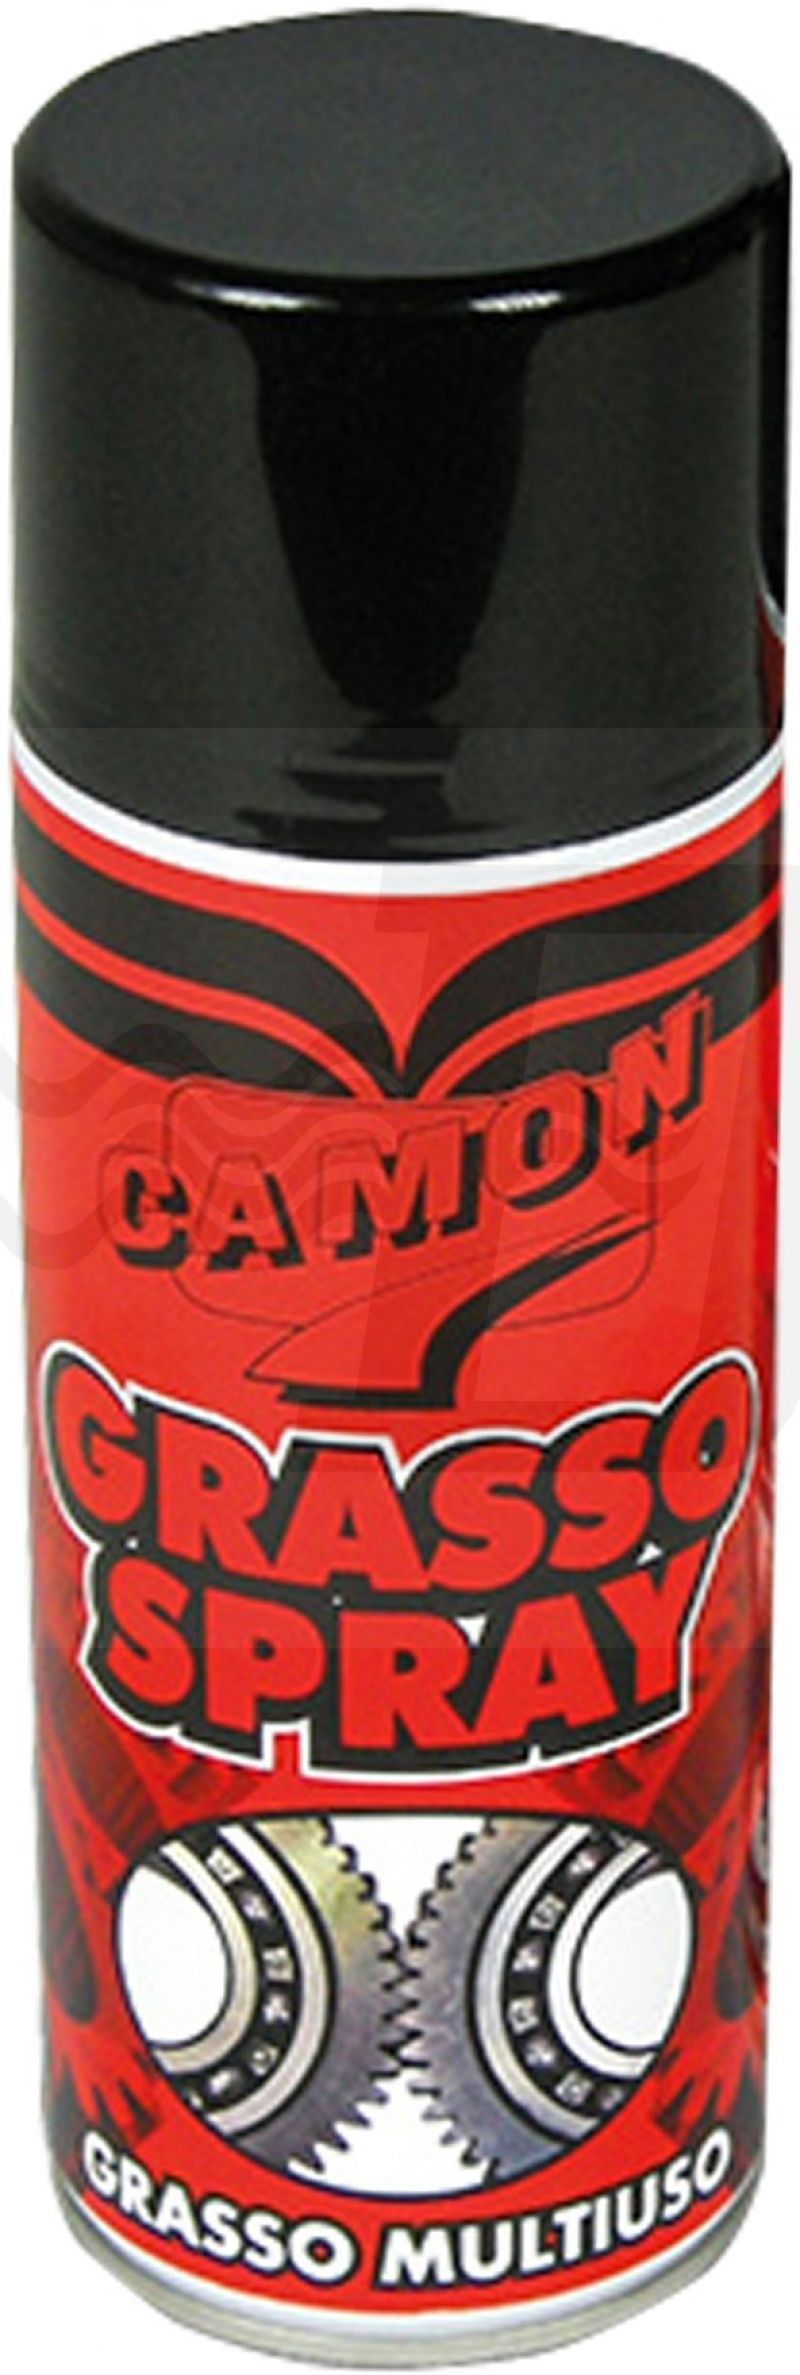 GRASSO SPRAY 400 ml